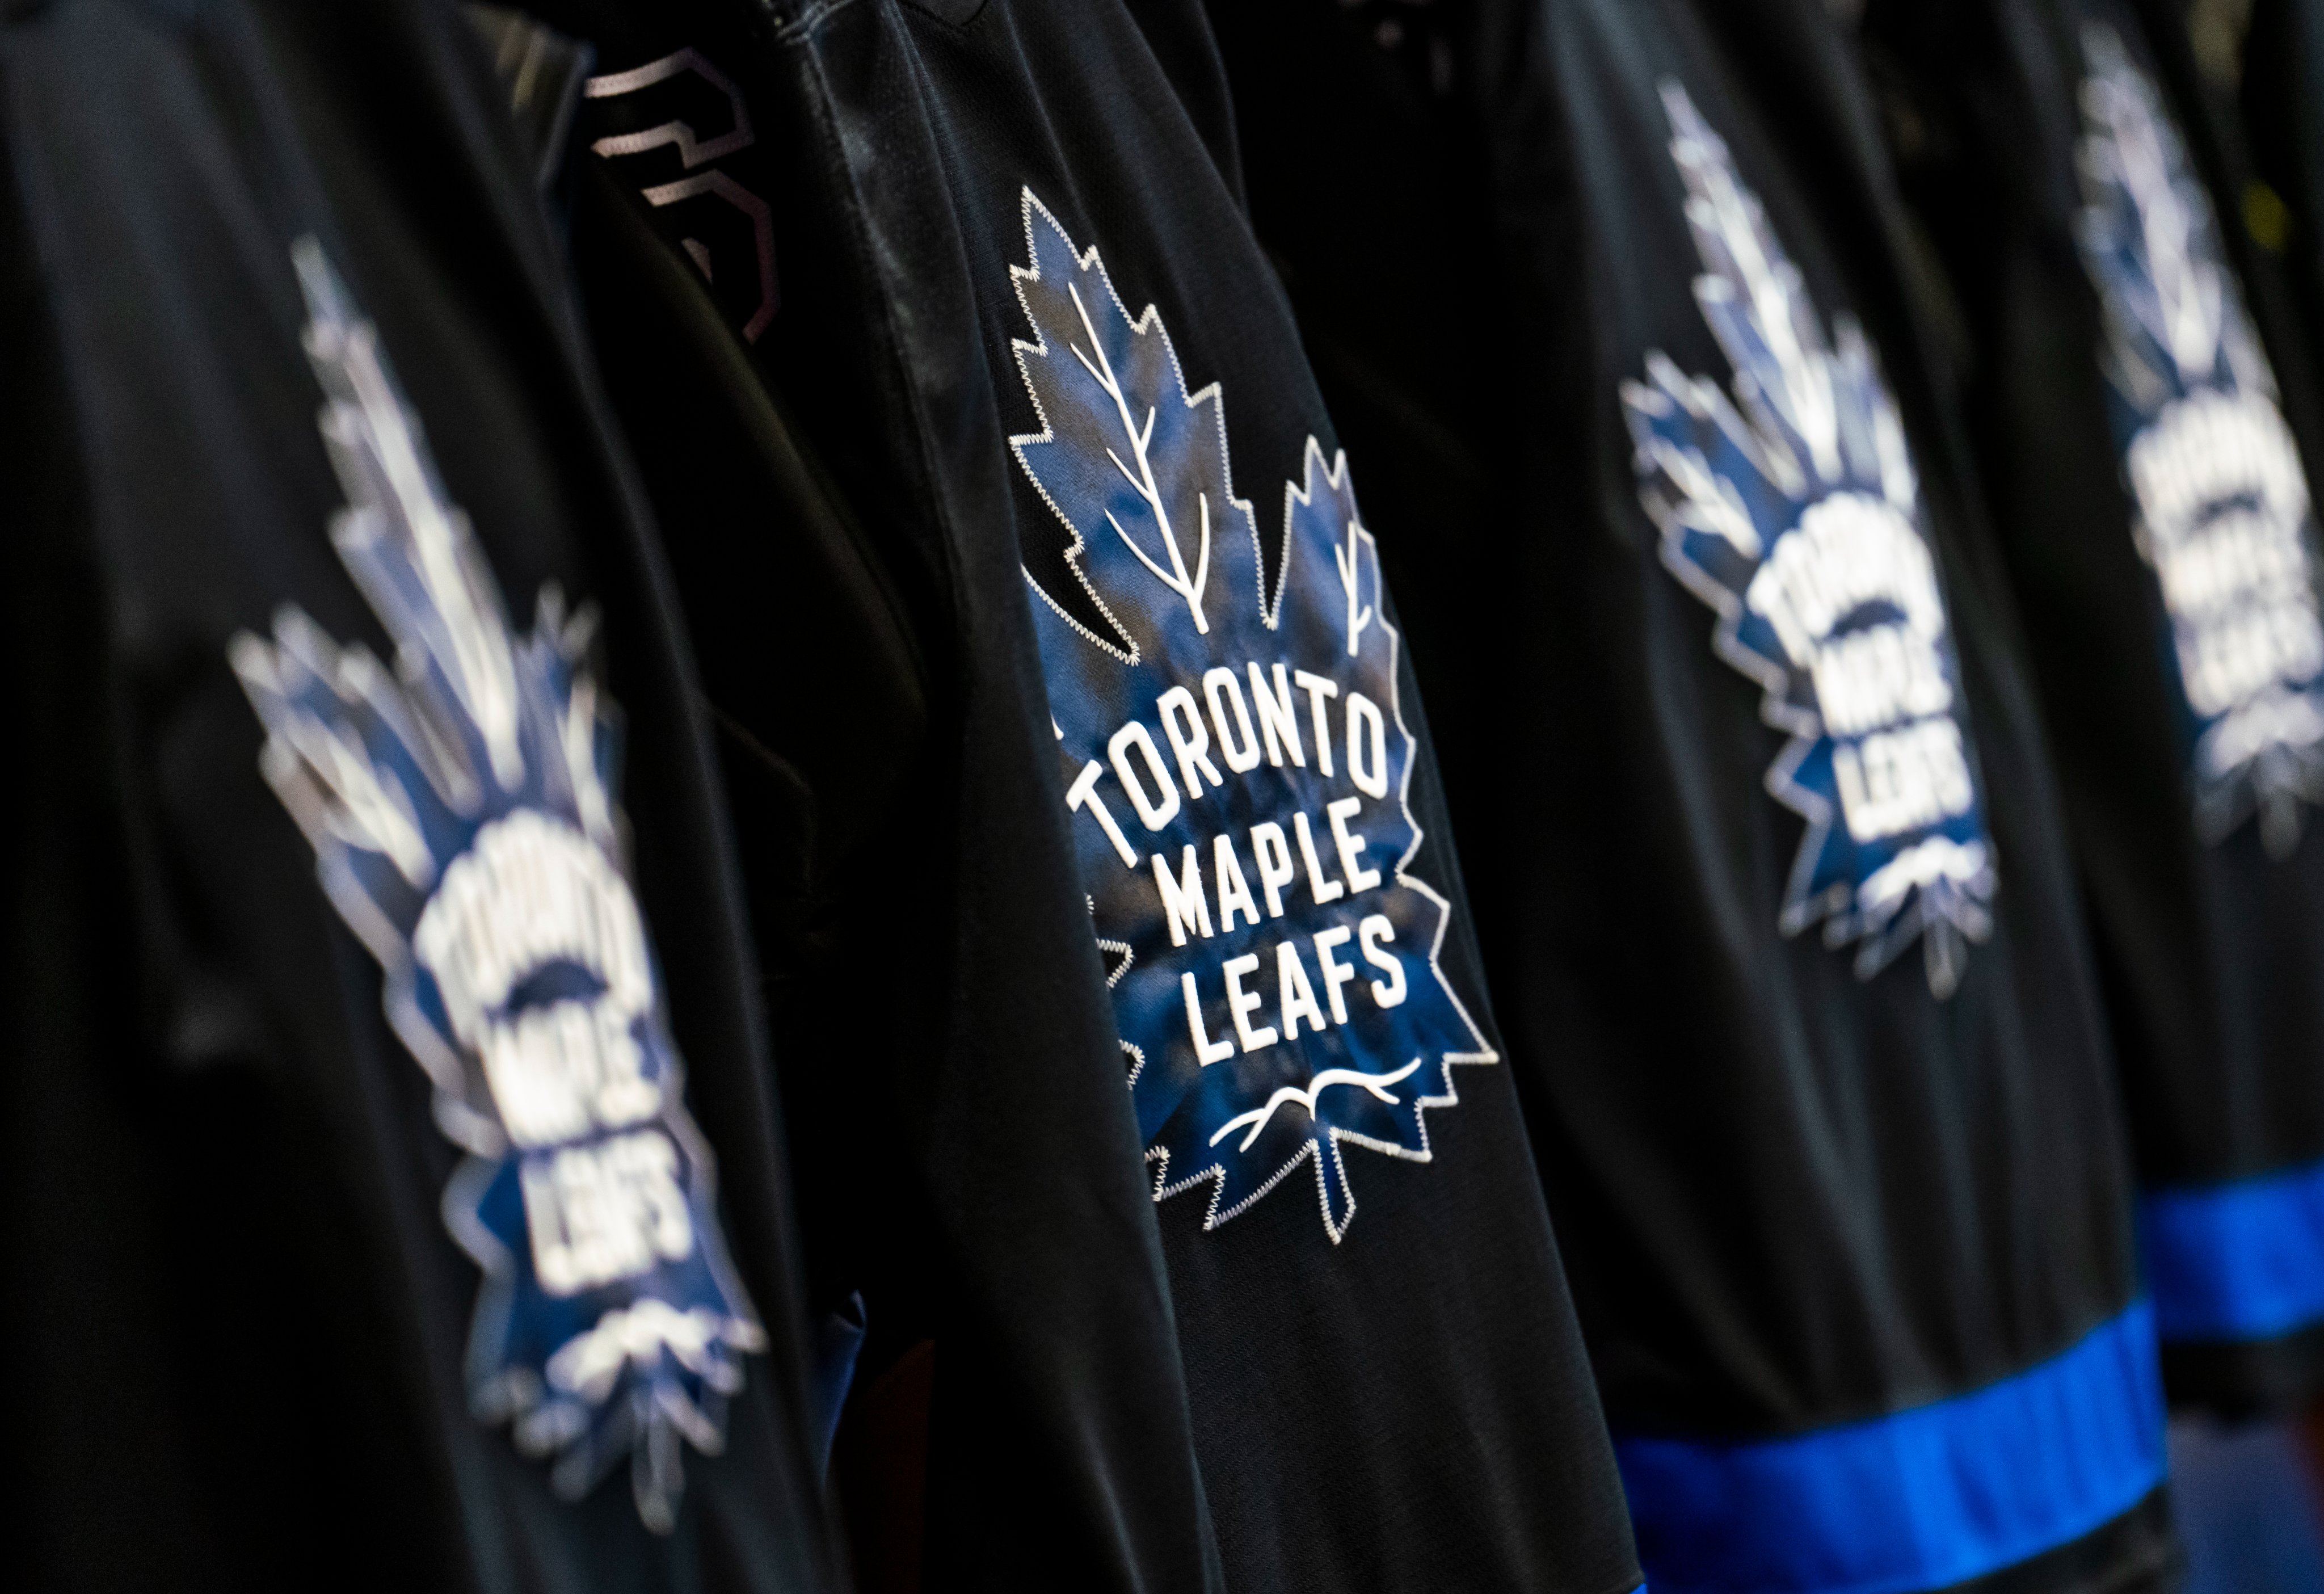 TORONTO, ON - MARCH 23 - Toronto Maple Leafs jerseys